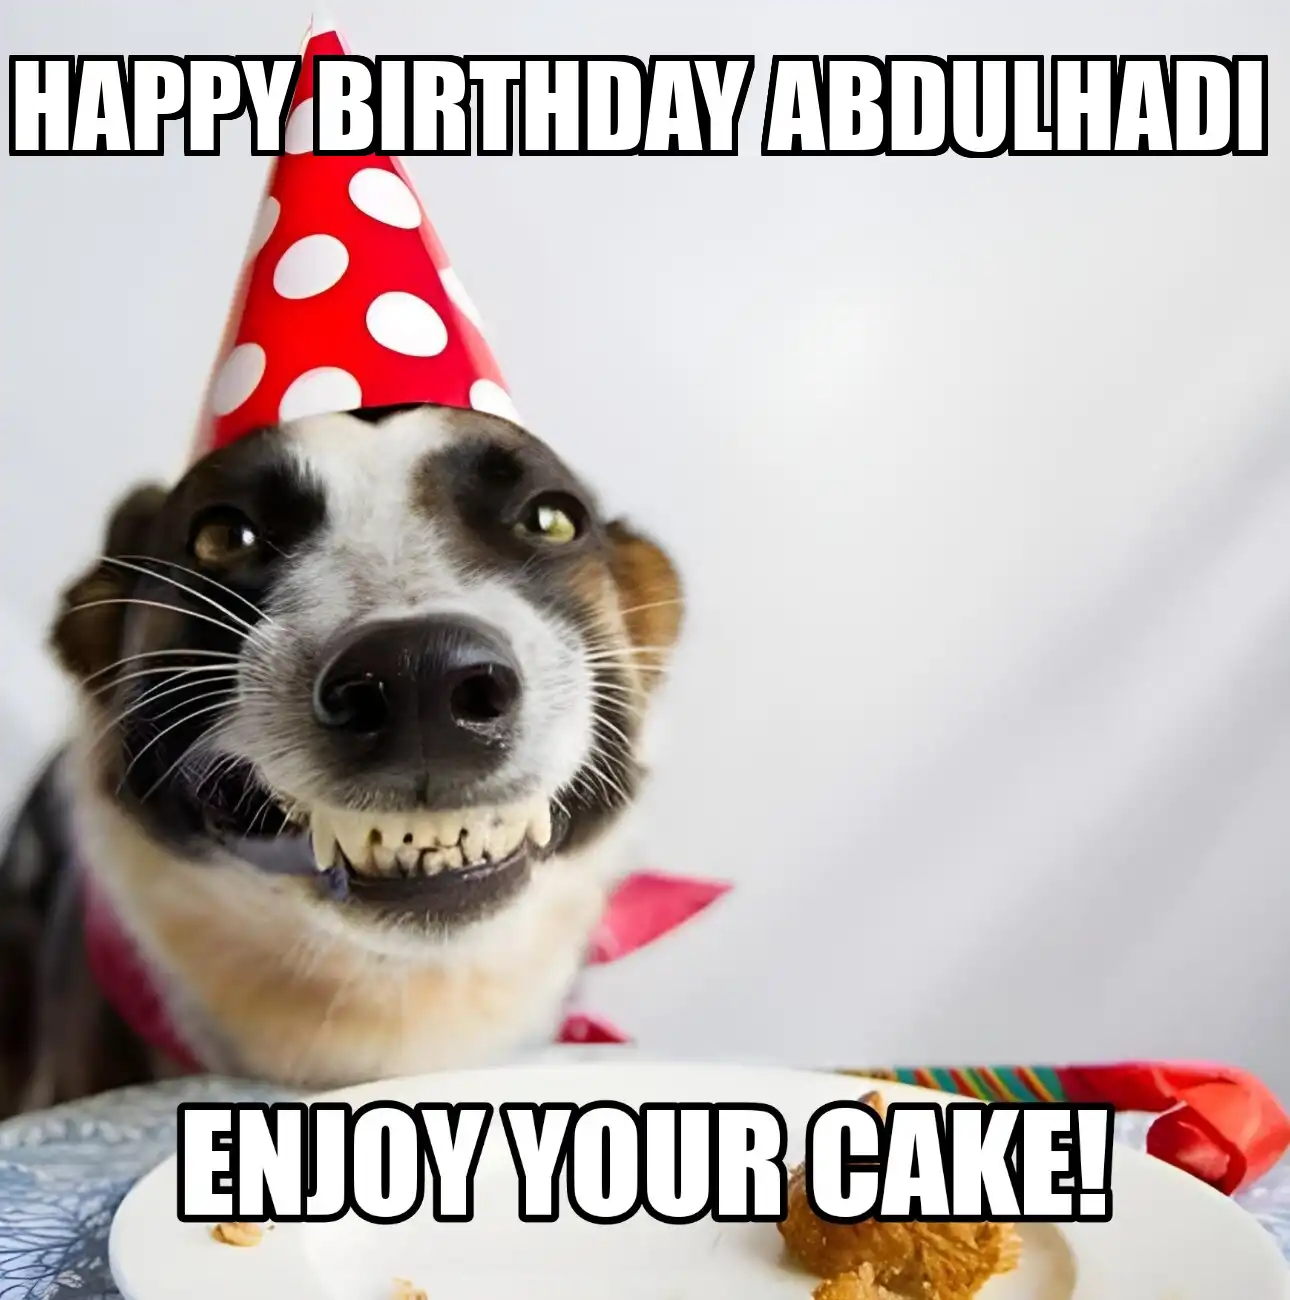 Happy Birthday Abdulhadi Enjoy Your Cake Dog Meme